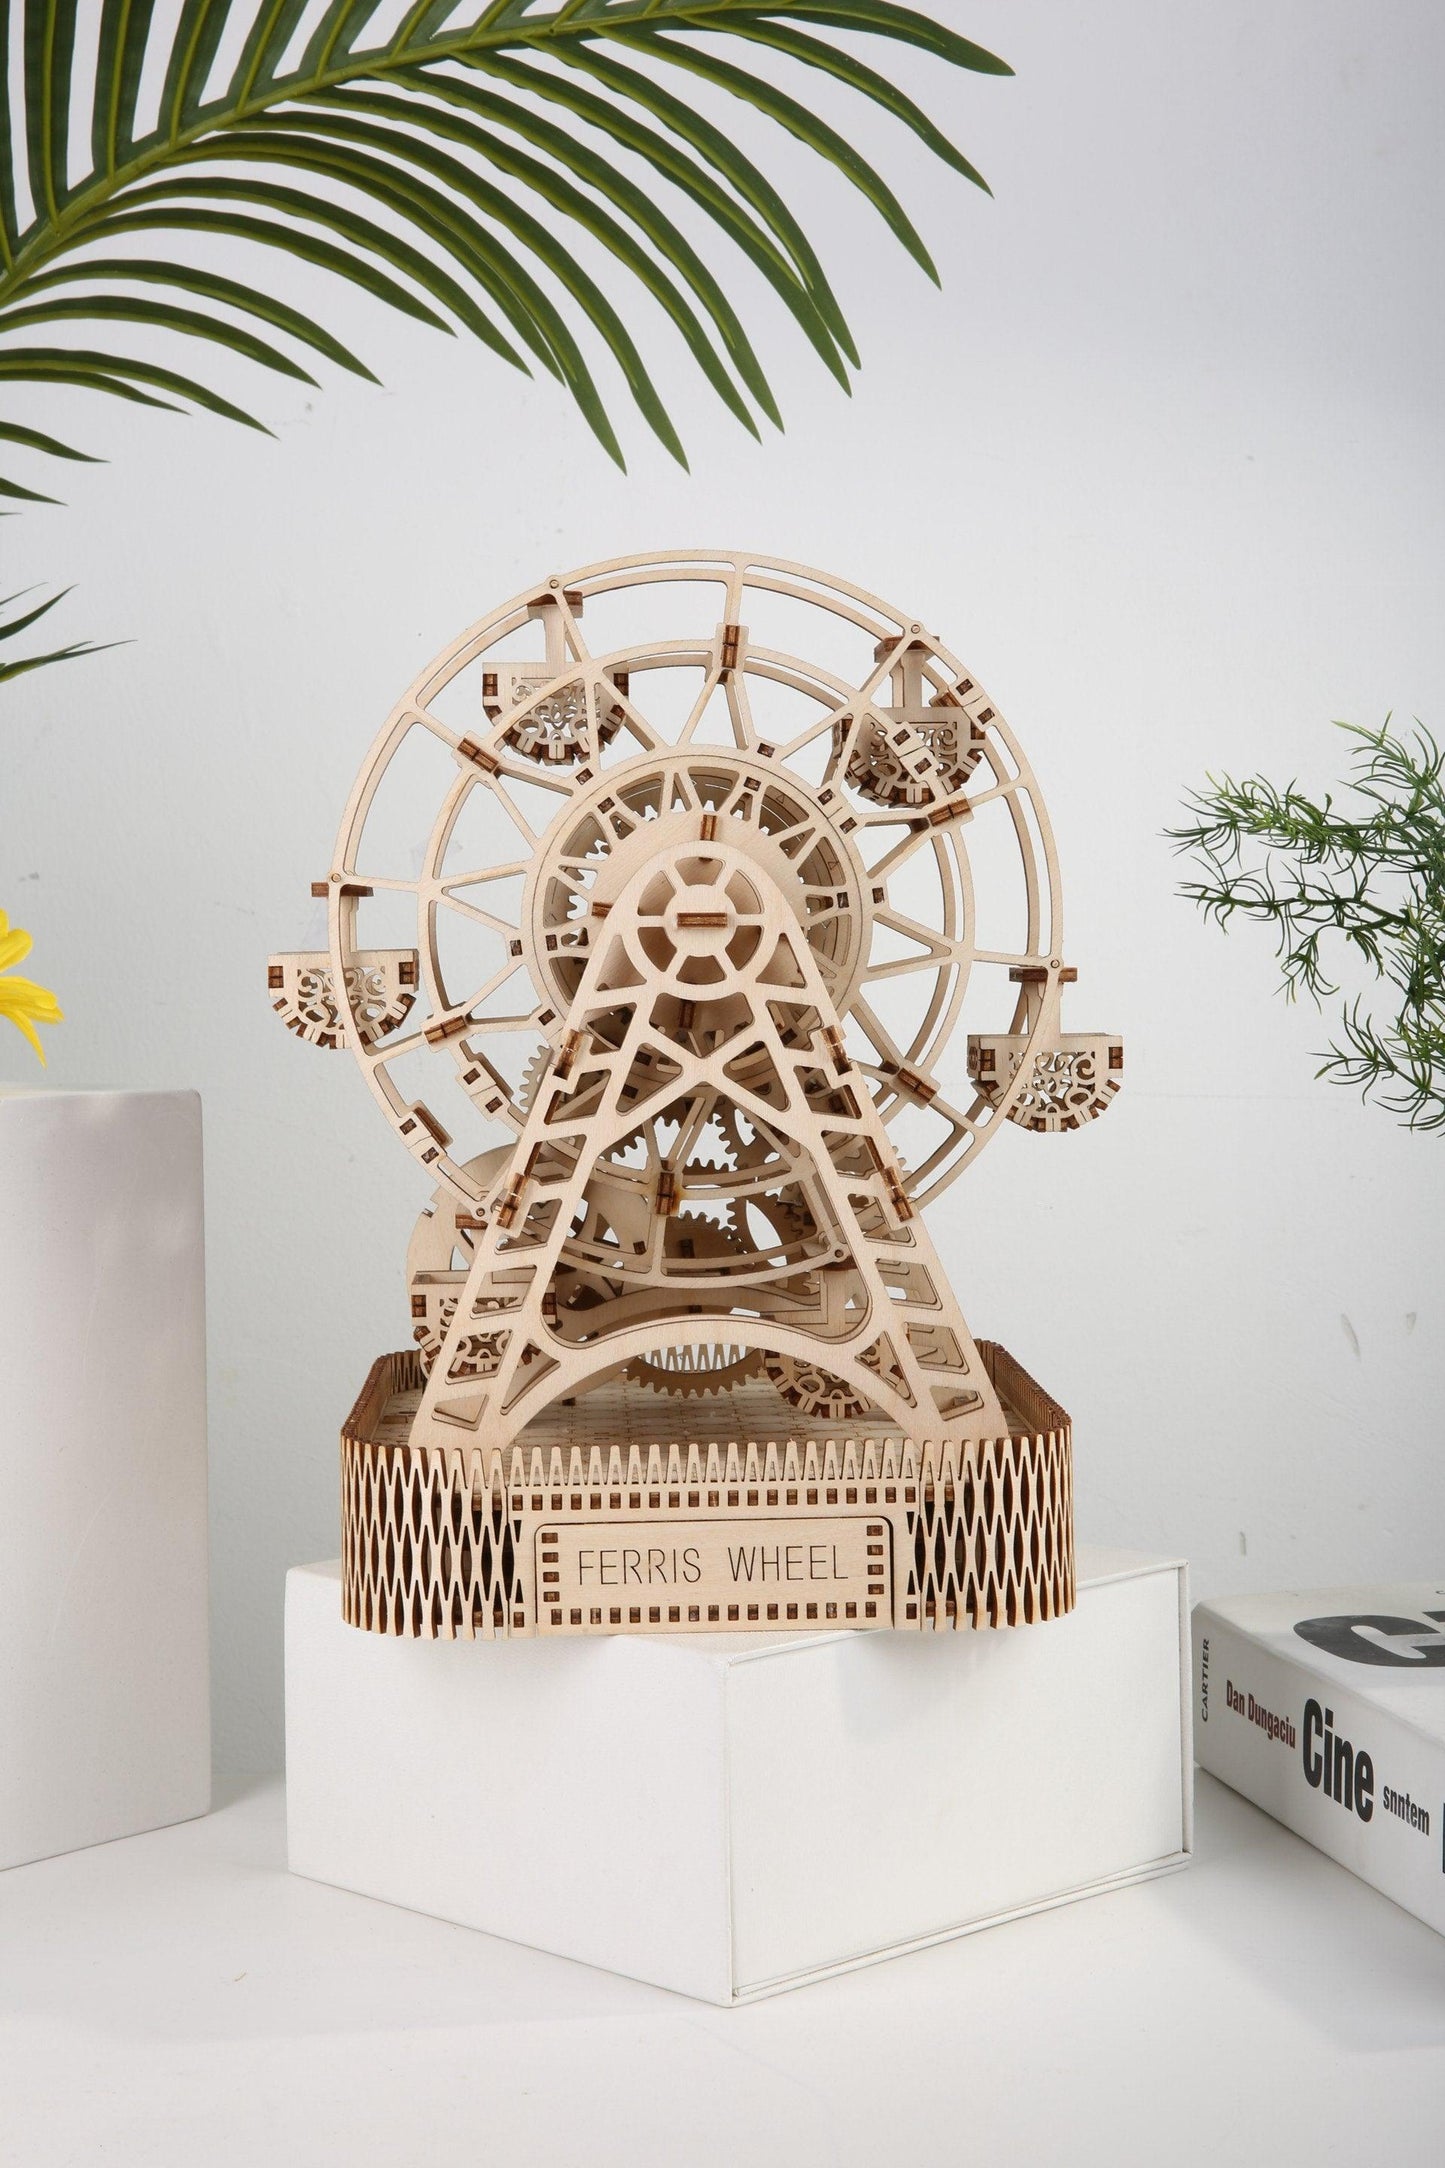 DIY Wooden Puzzle Kit - Ferris Wheel Mechanical Wooden Puzzle Kit With Musical Movement Box - DIY Wooden Puzzle - Wooden Miniature Dollhouse